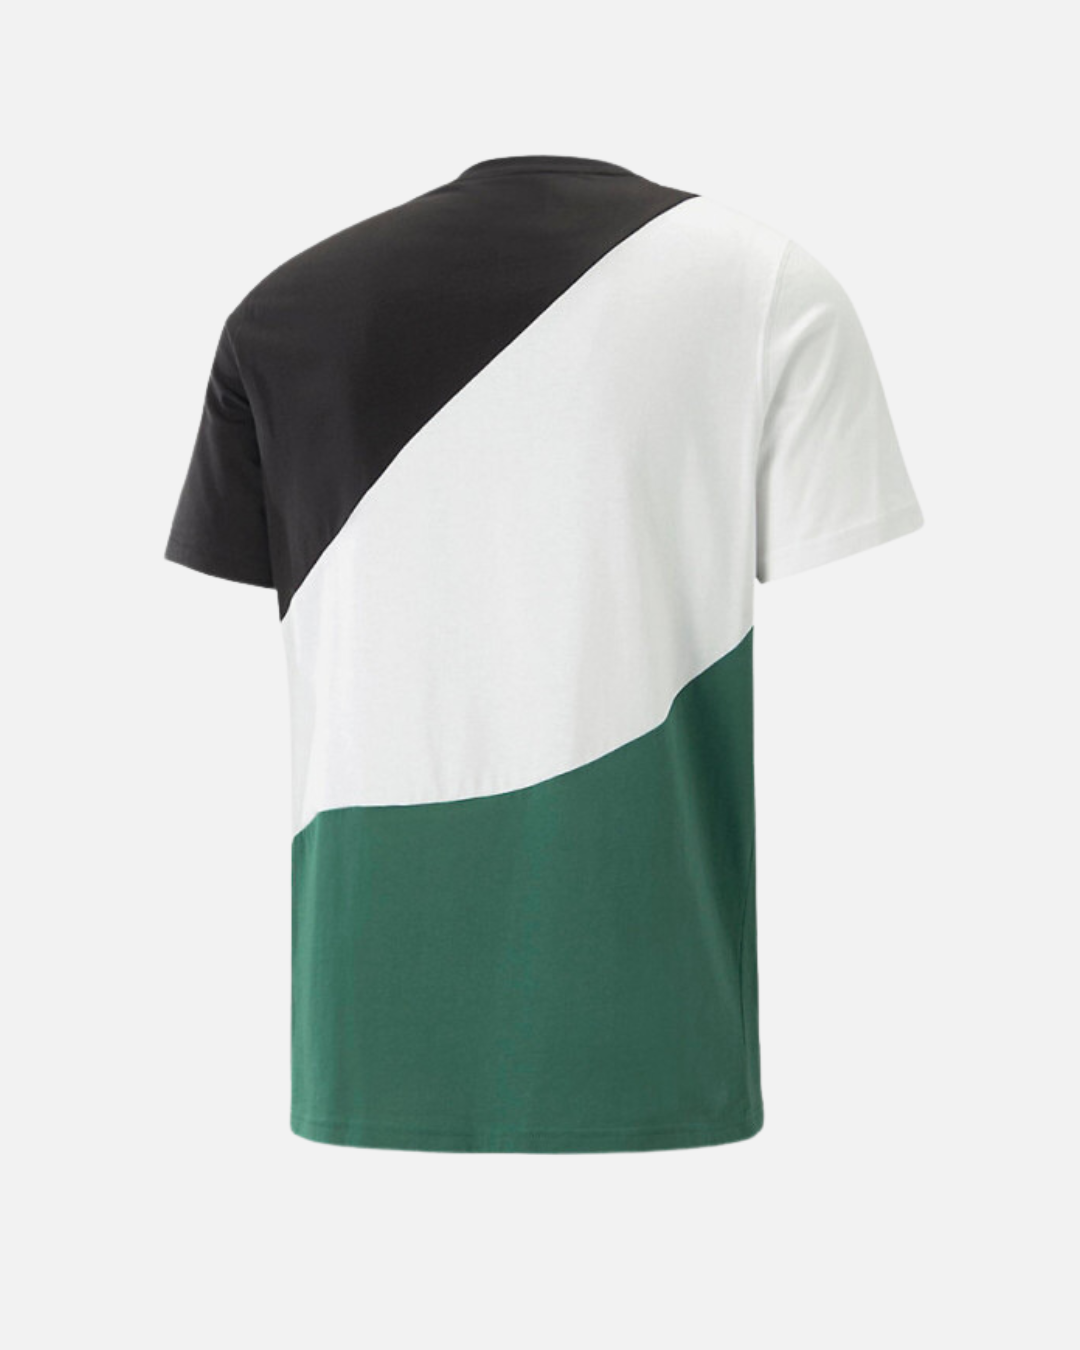 Puma Power T-shirt - Black/White/Green